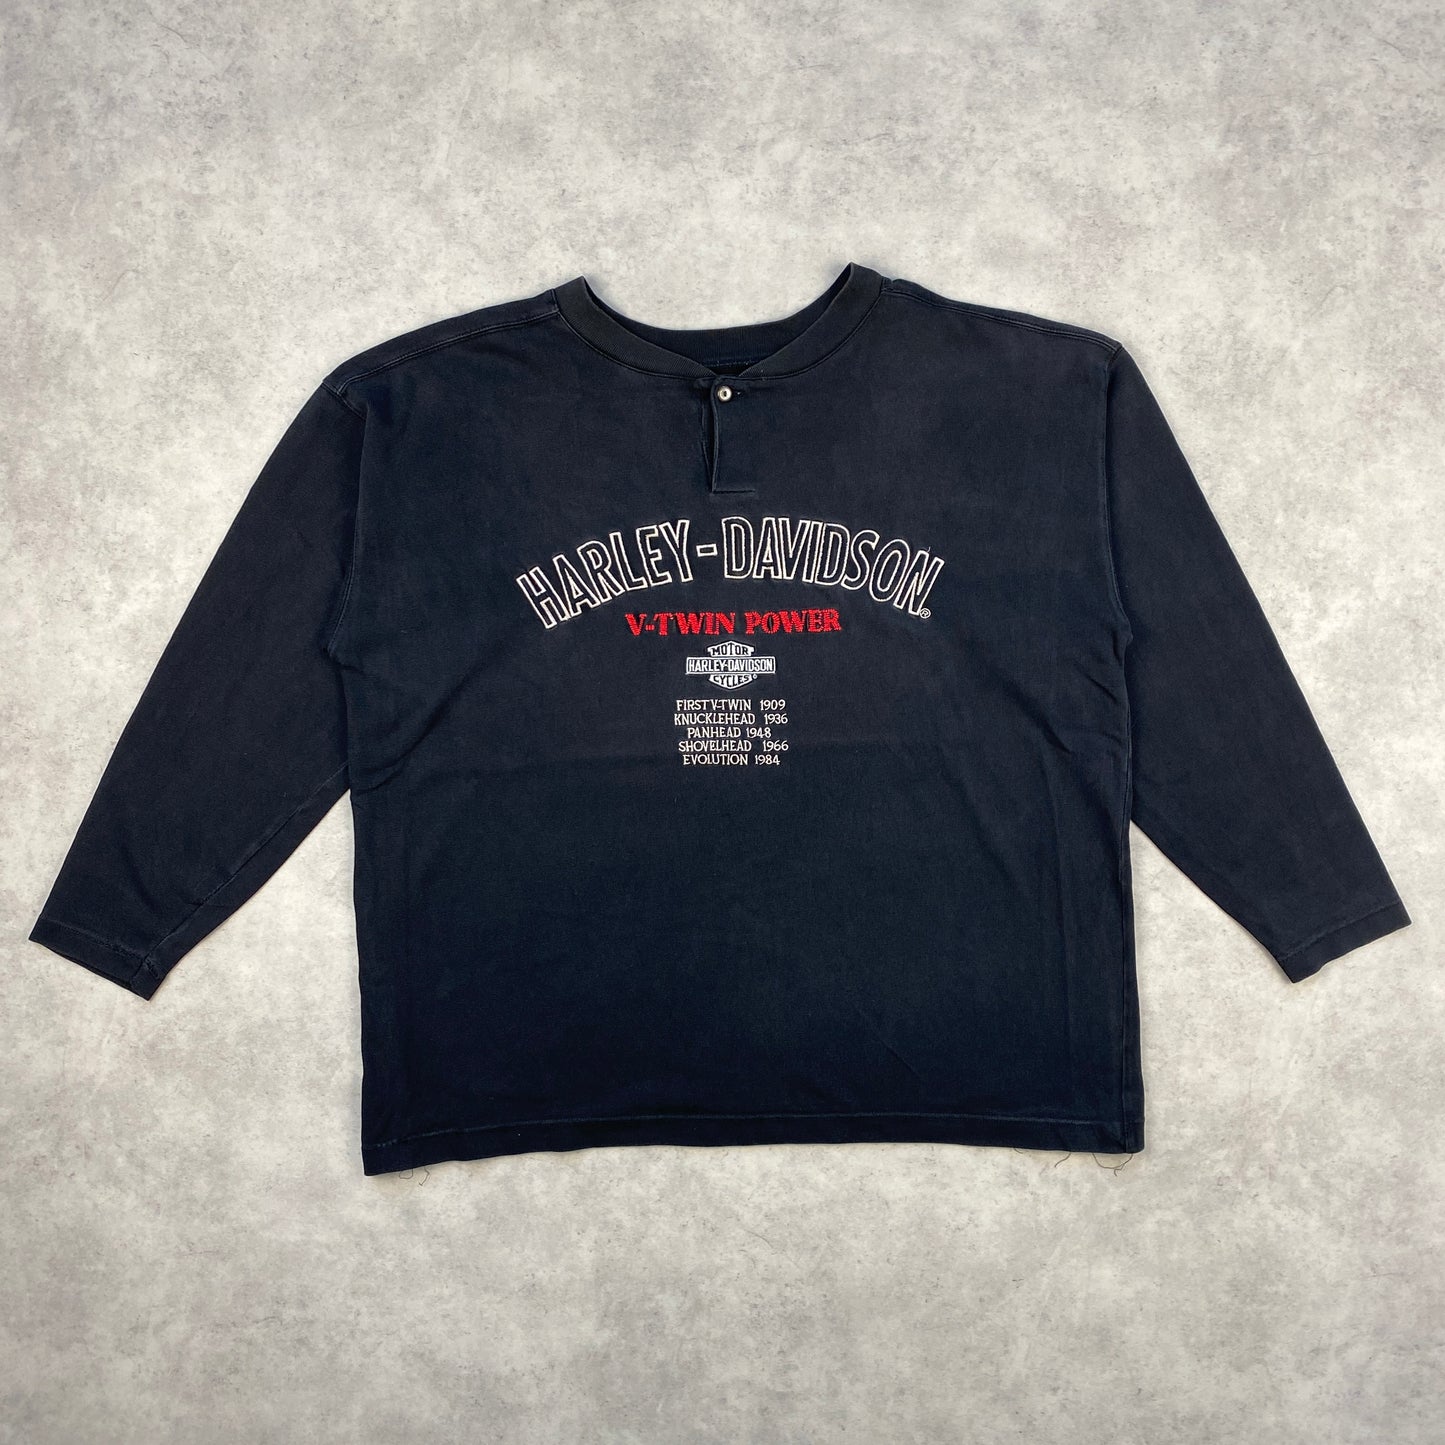 Harley Davidson RARE heavyweight V-Twin Power shirt (L)